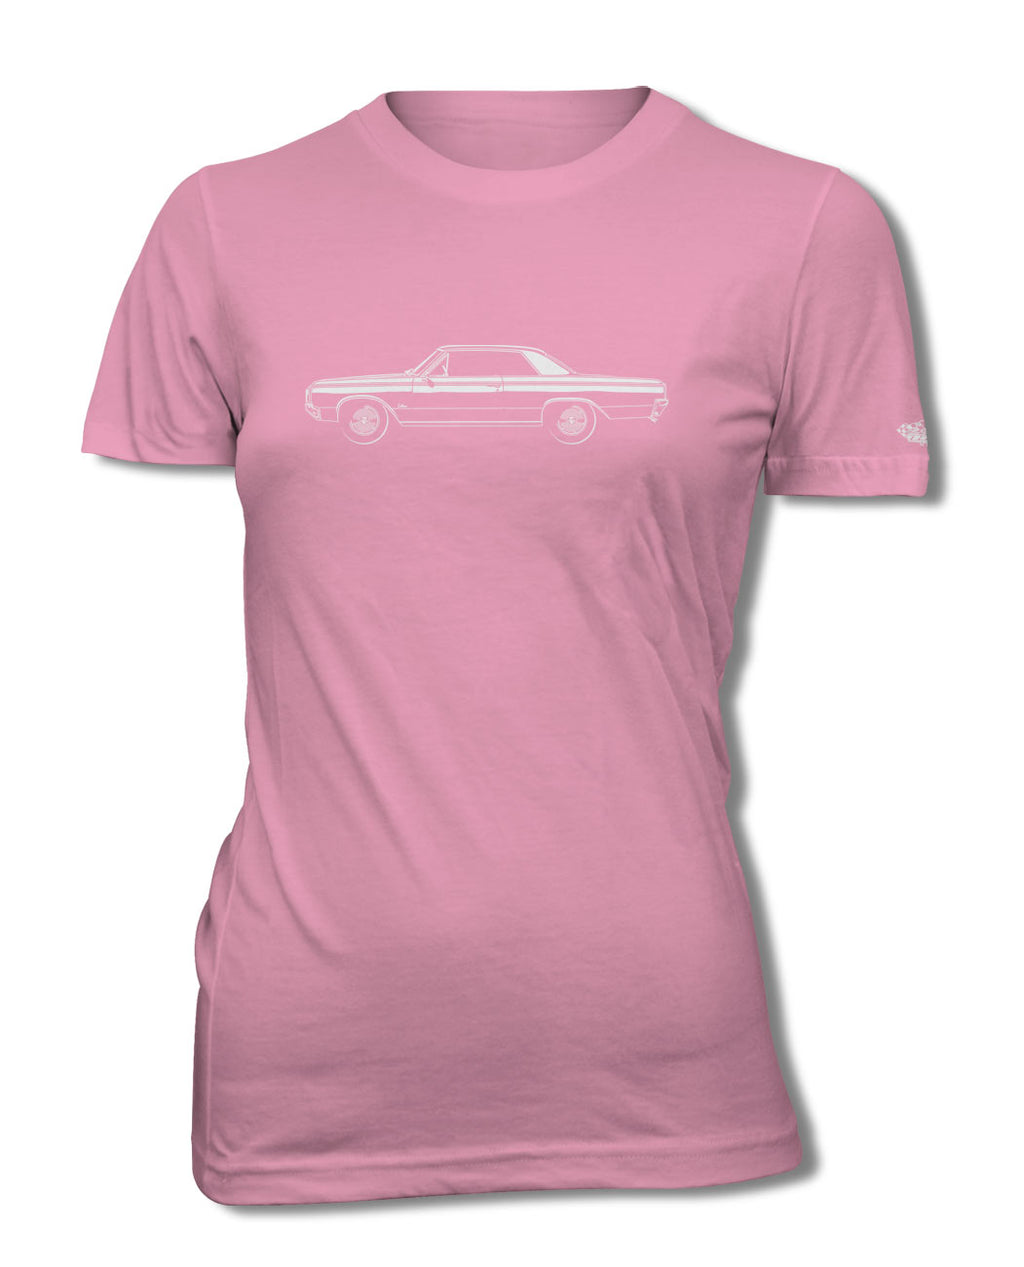 1964 Oldsmobile Cutlass Coupe T-Shirt - Women - Side View